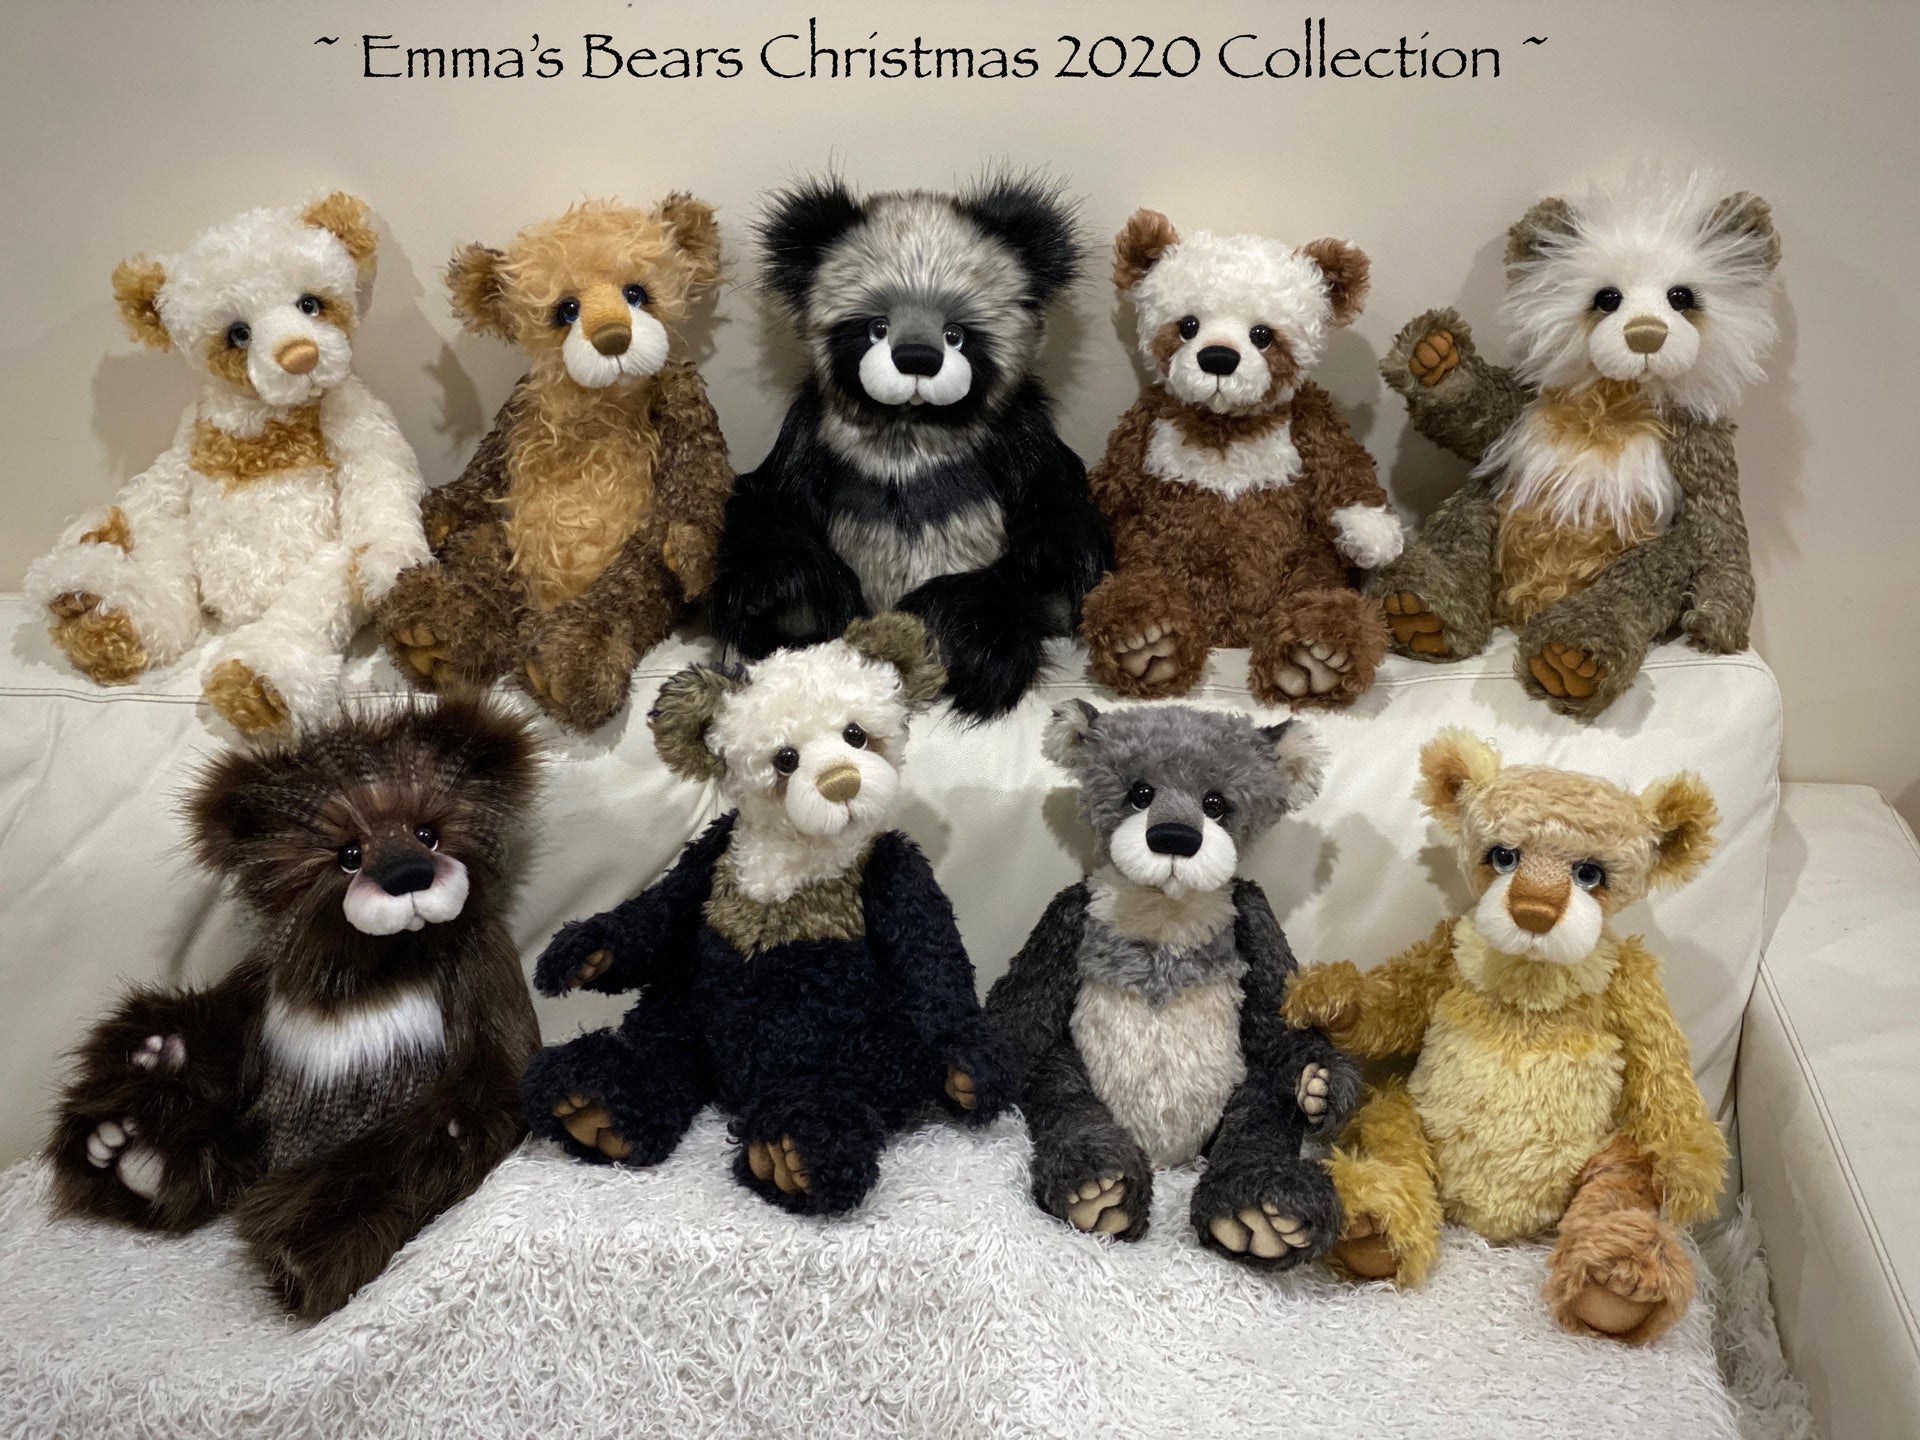 Holly Beary - 18" Christmas 2020 MOHAIR Artist toddler style Bear by Emma's Bears - OOAK